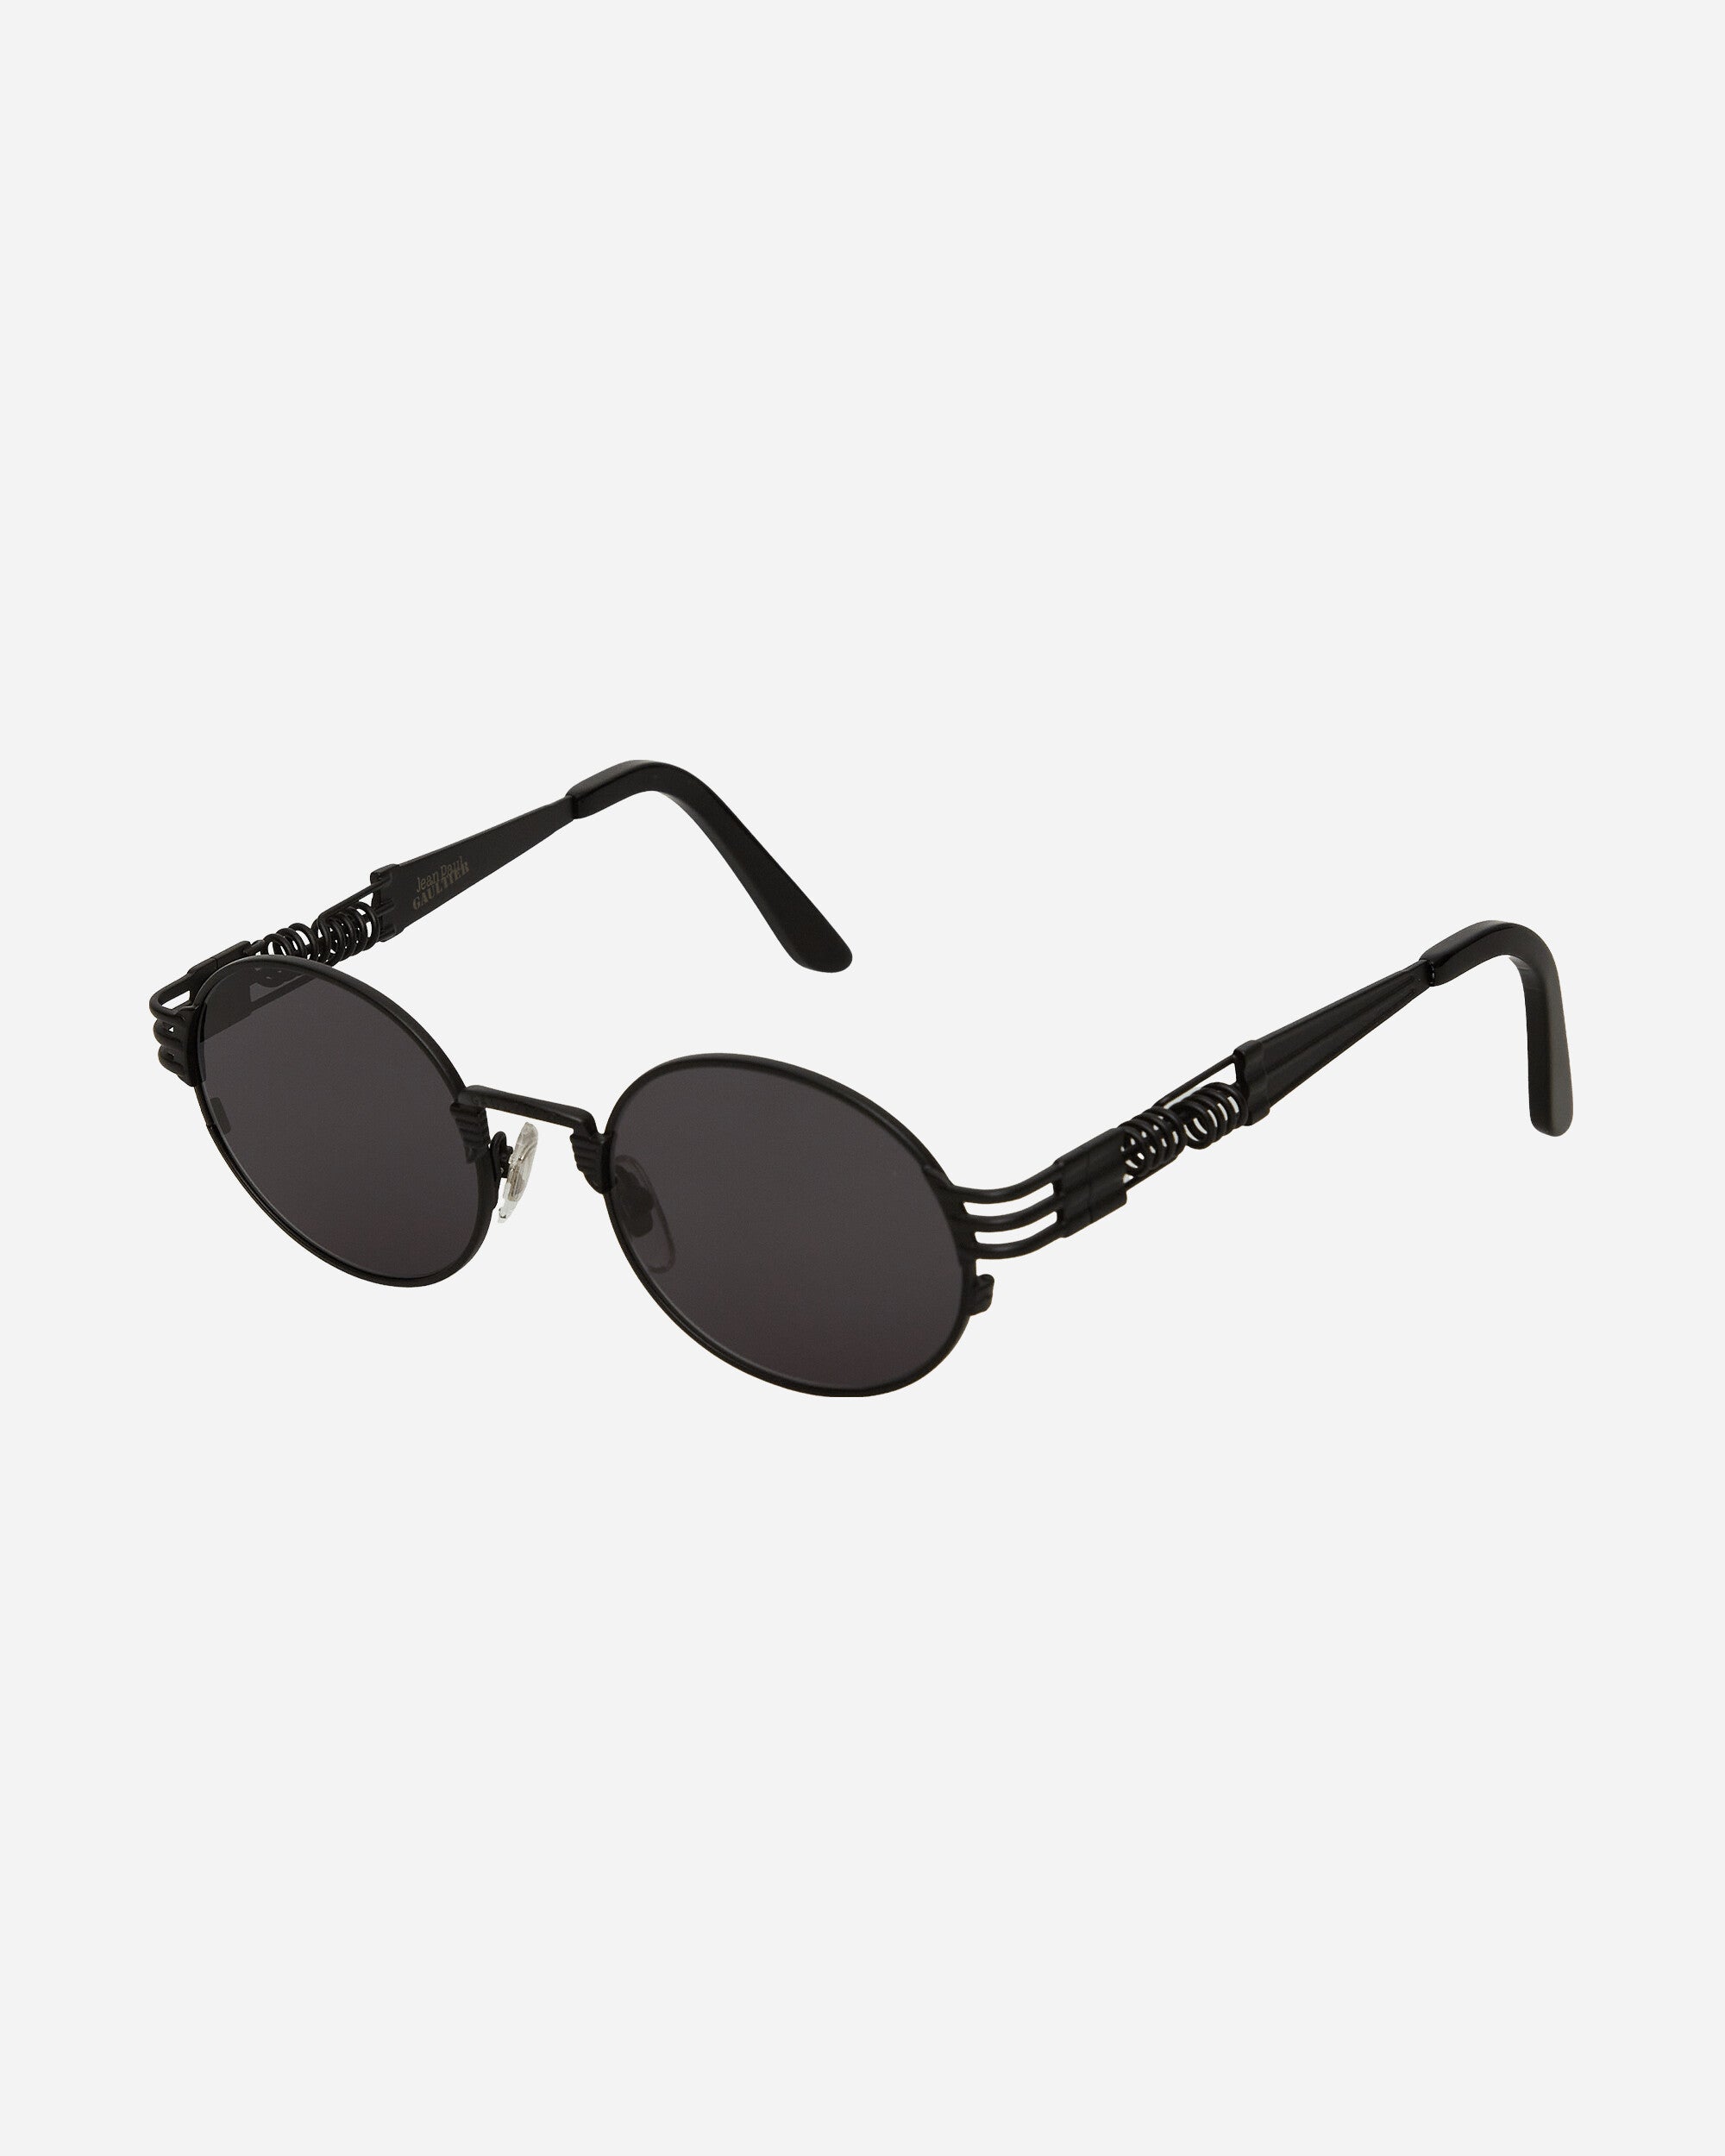 Jean Paul Gaultier 56-6106 Sunglasses Black Slam Official Store